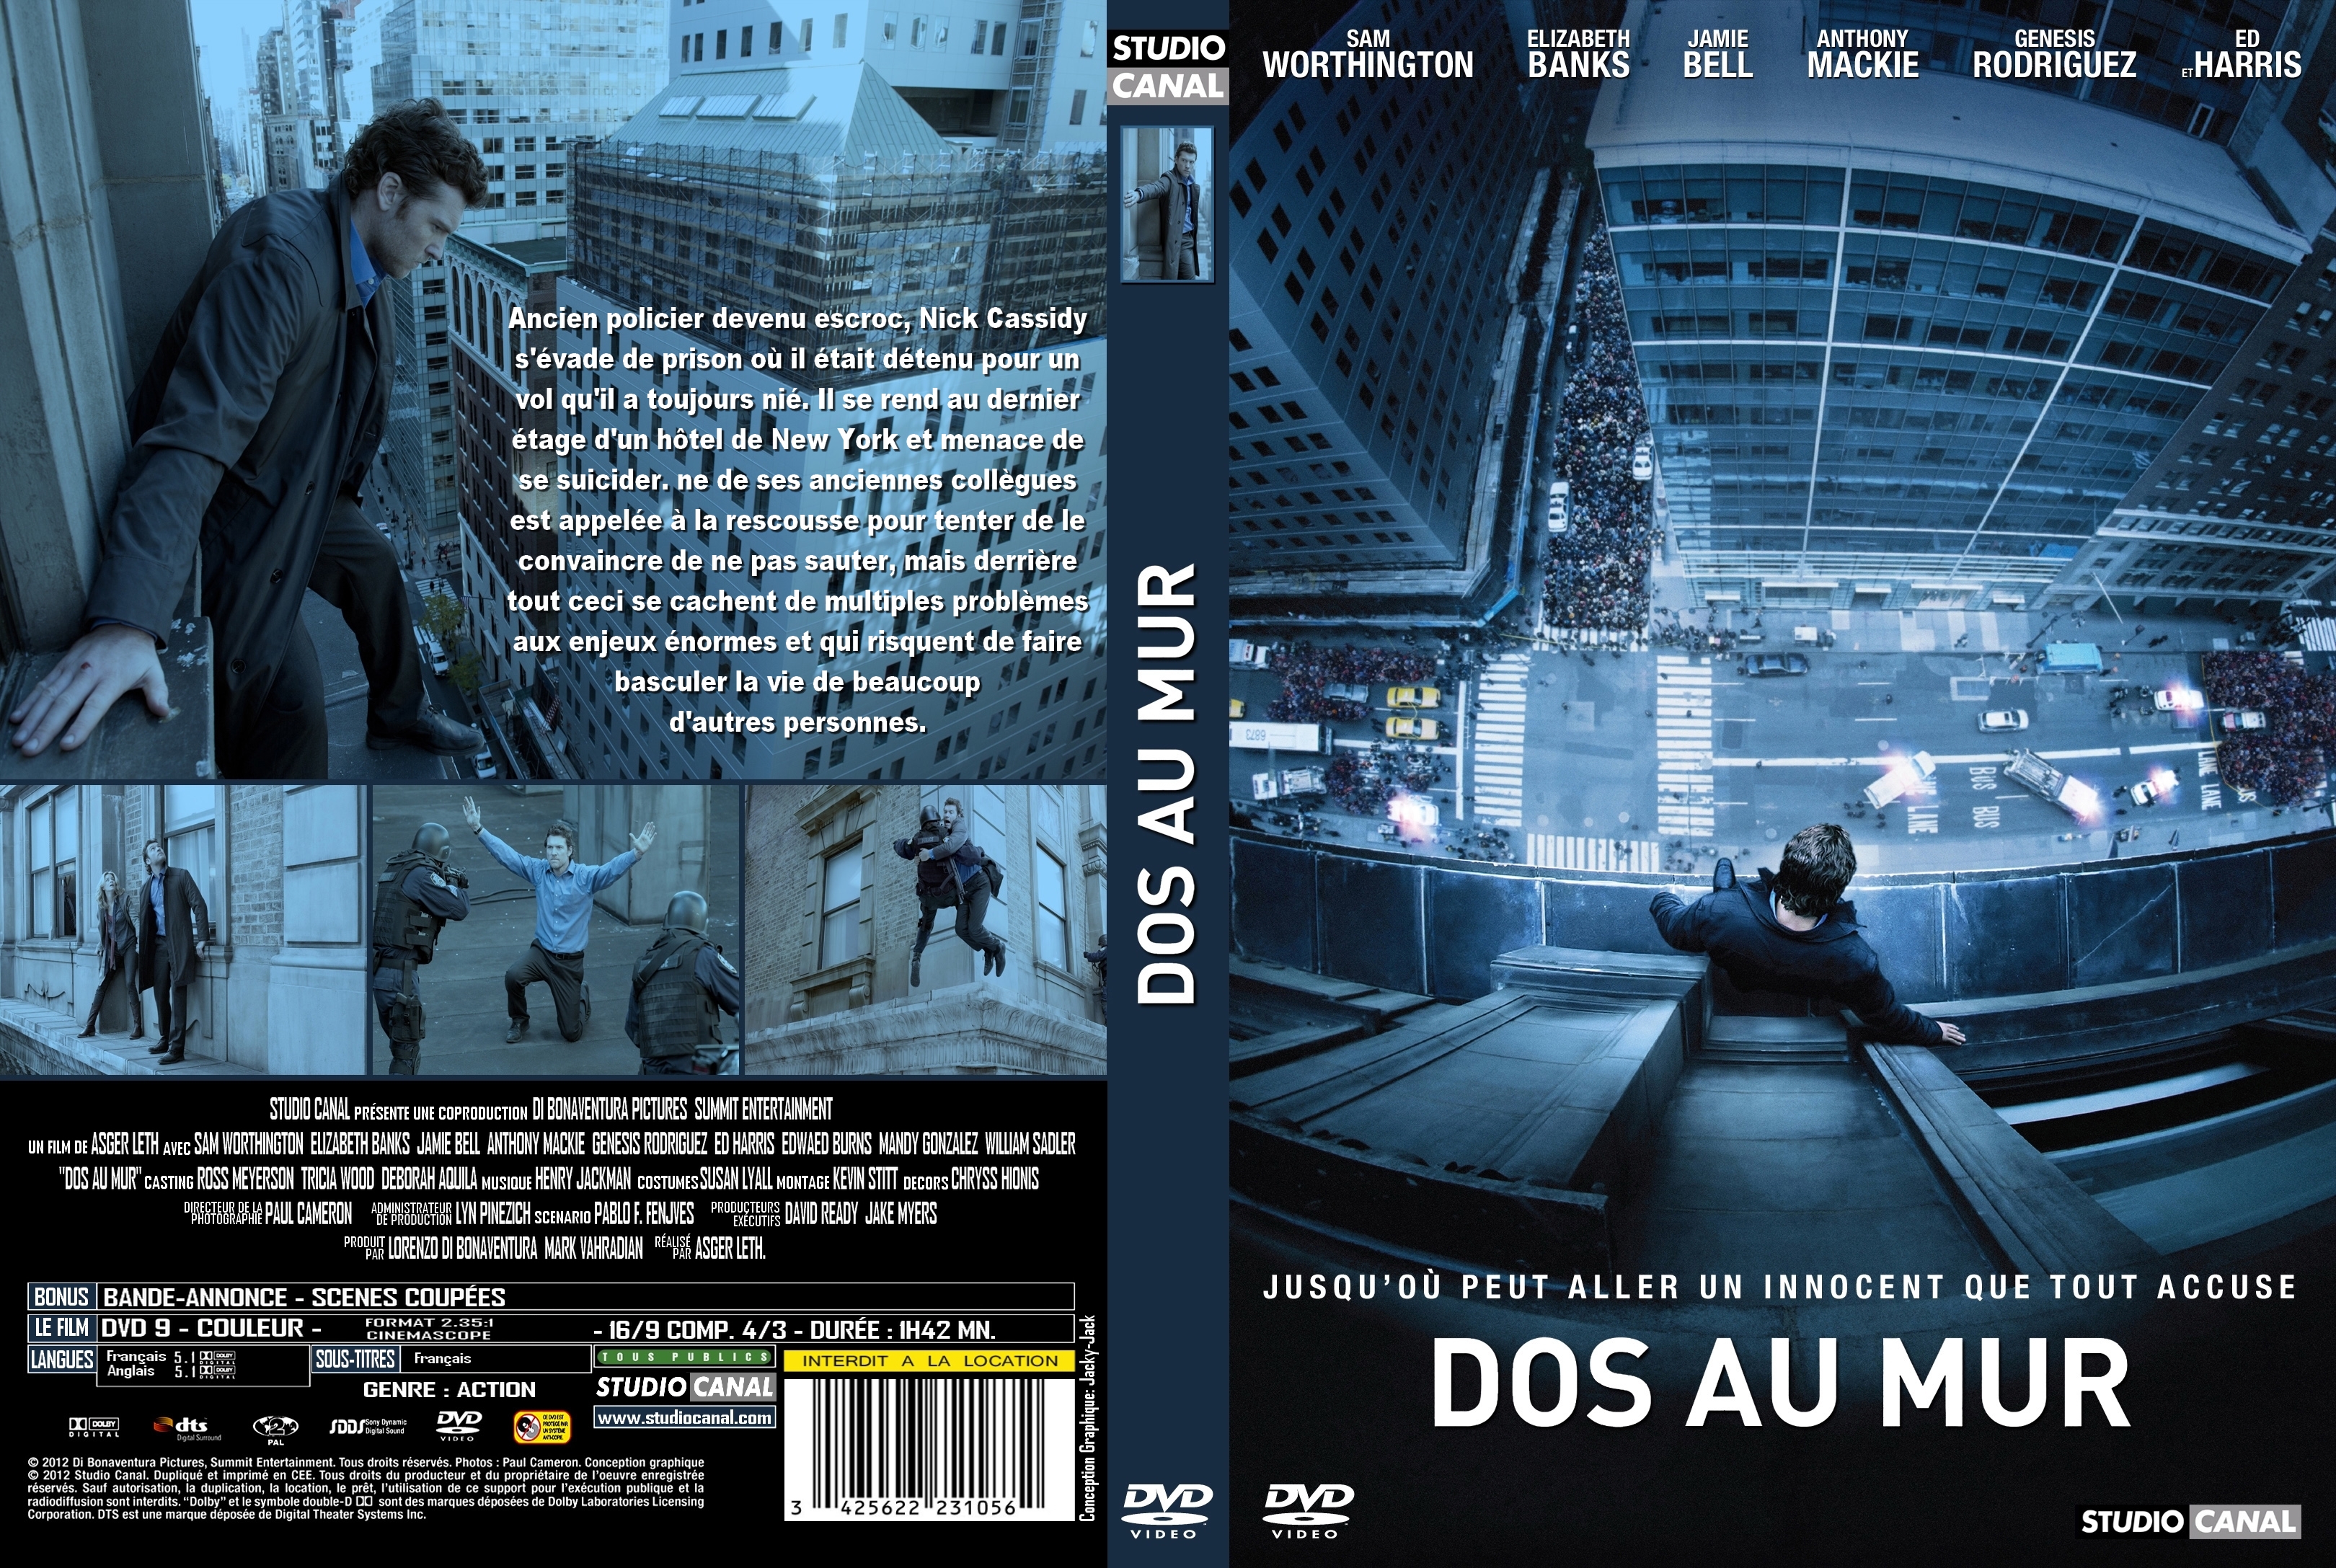 Jaquette DVD Dos au Mur custom